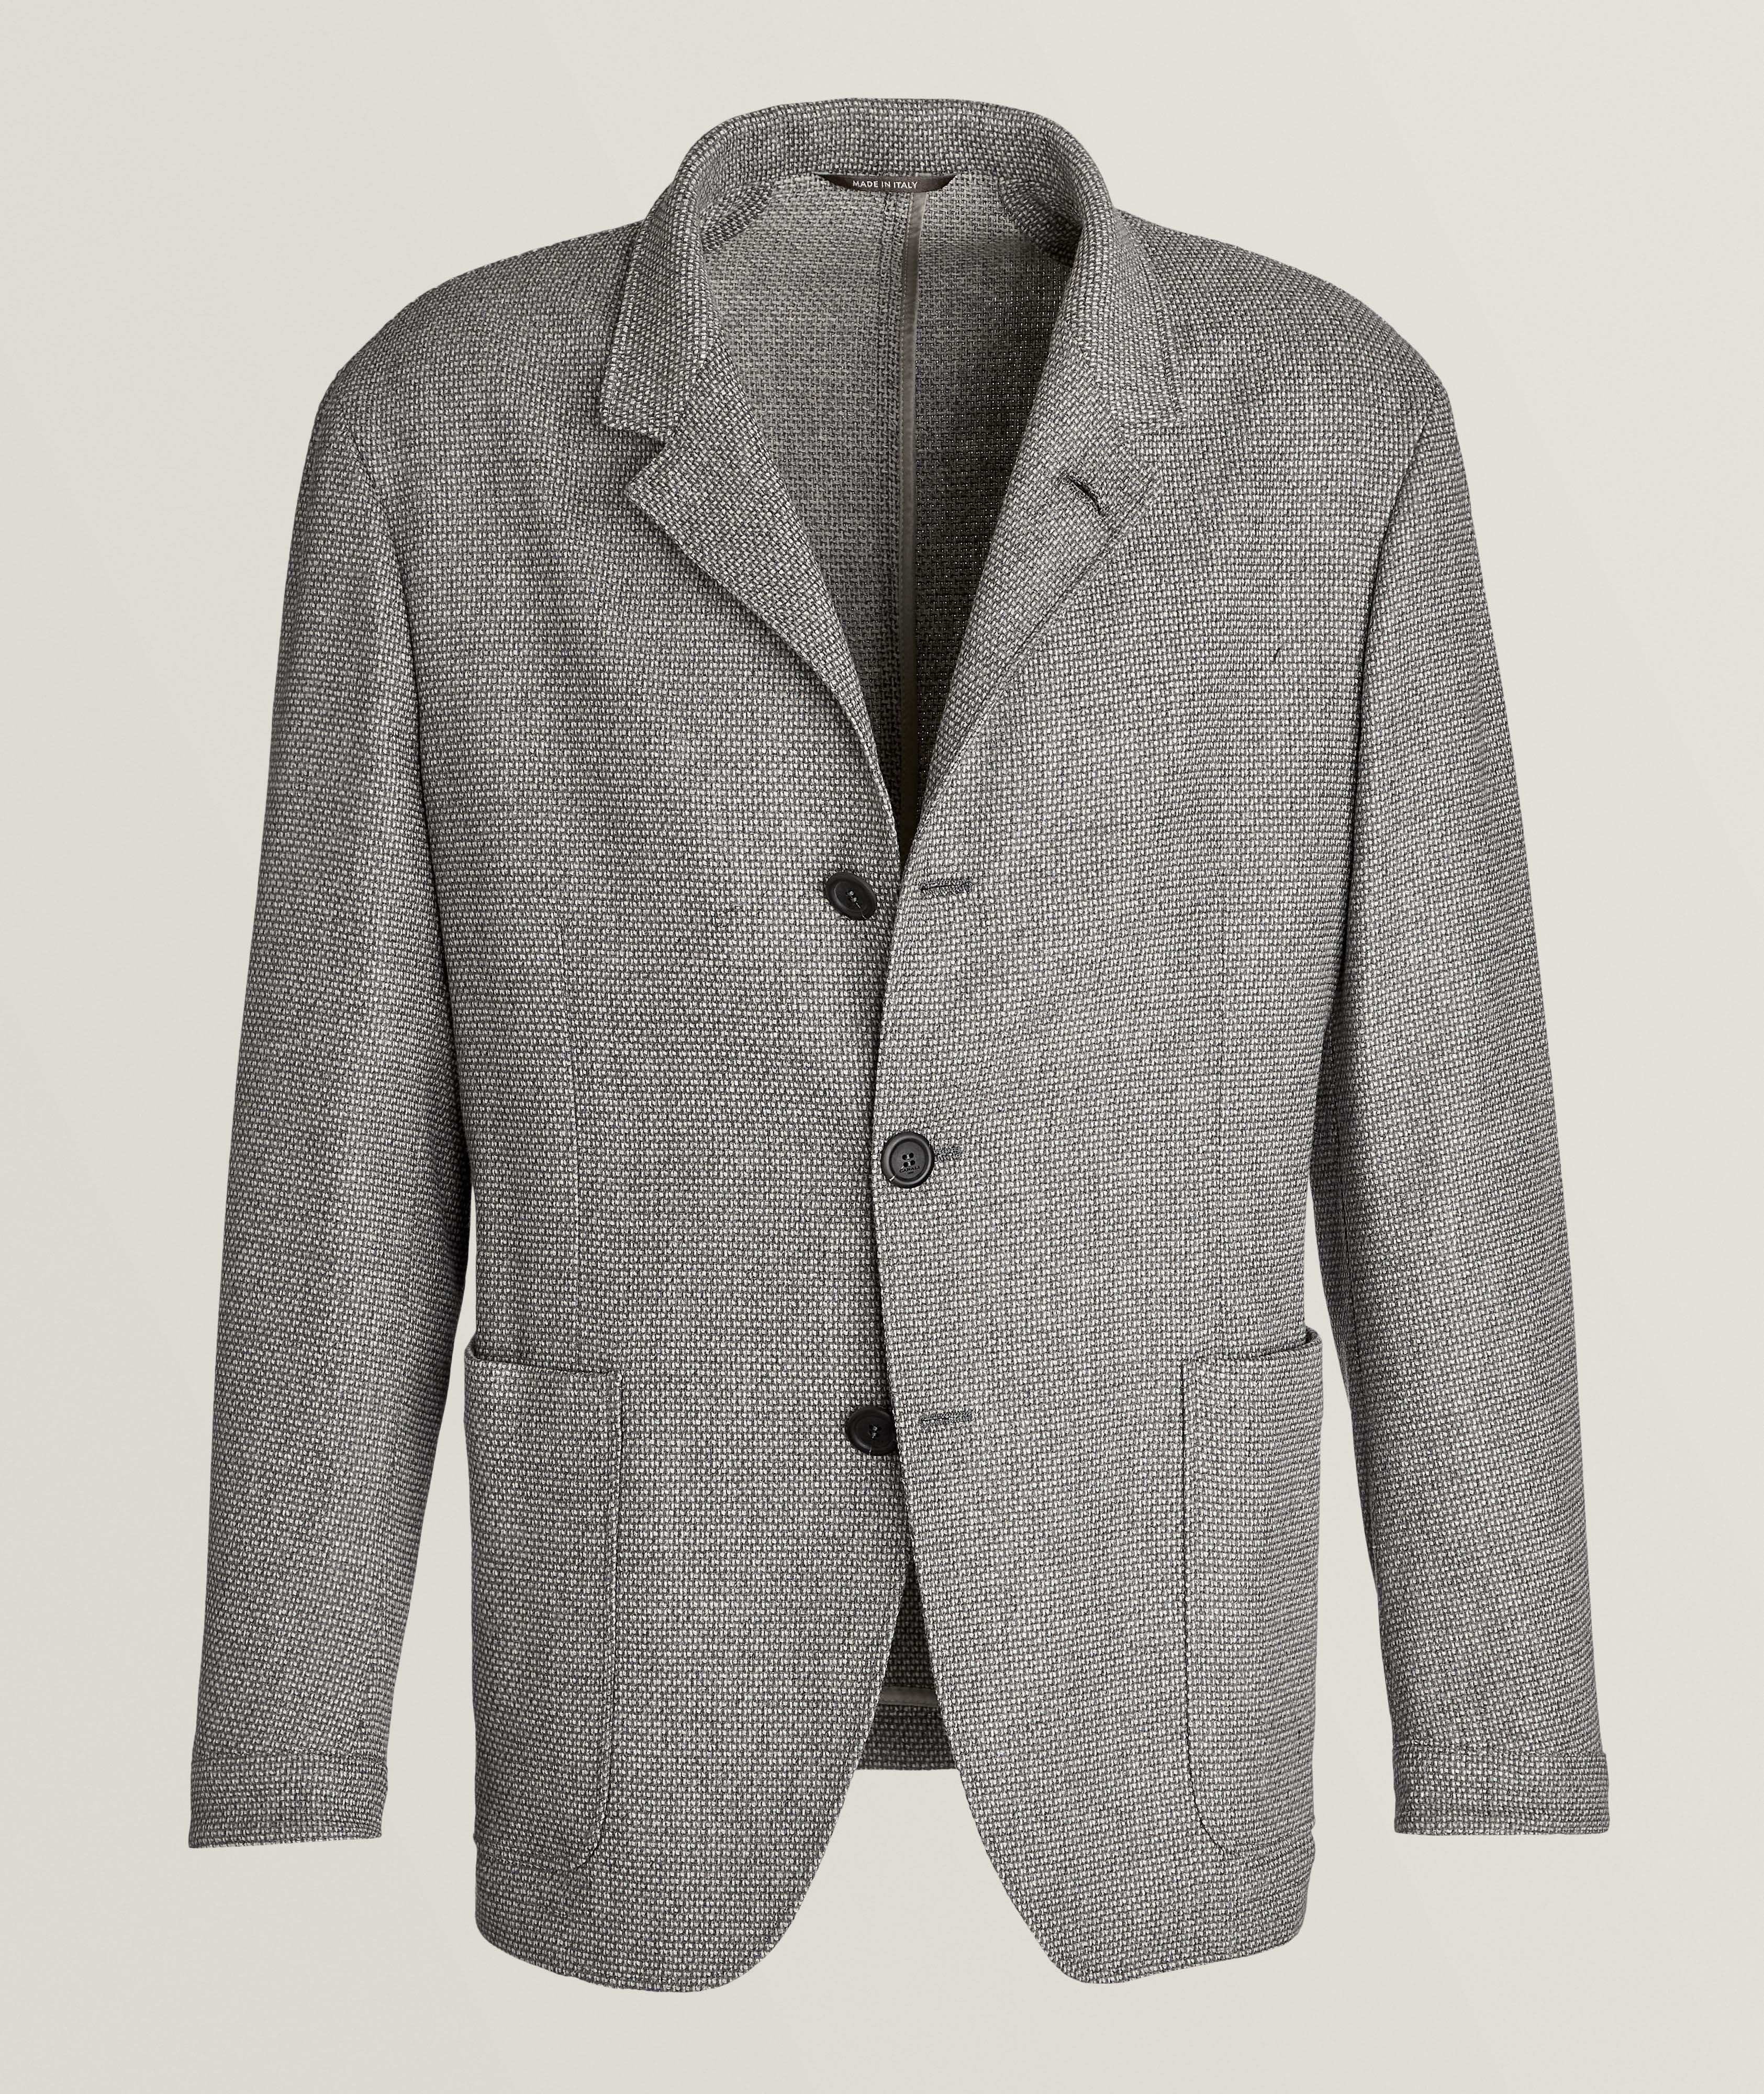 Textured Weave Stretch-Wool Blend Sport Jacket image 0